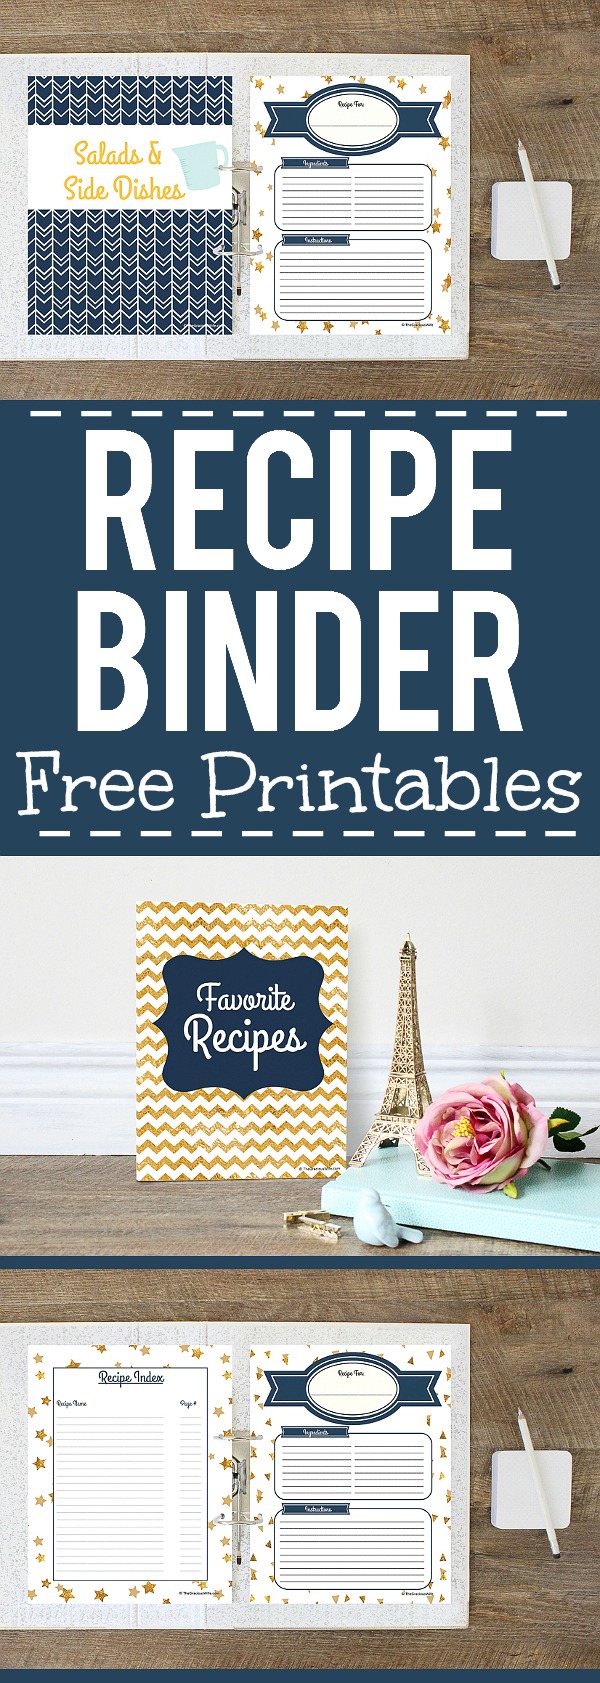 how-to-make-a-recipe-binder-free-recipe-binder-printables